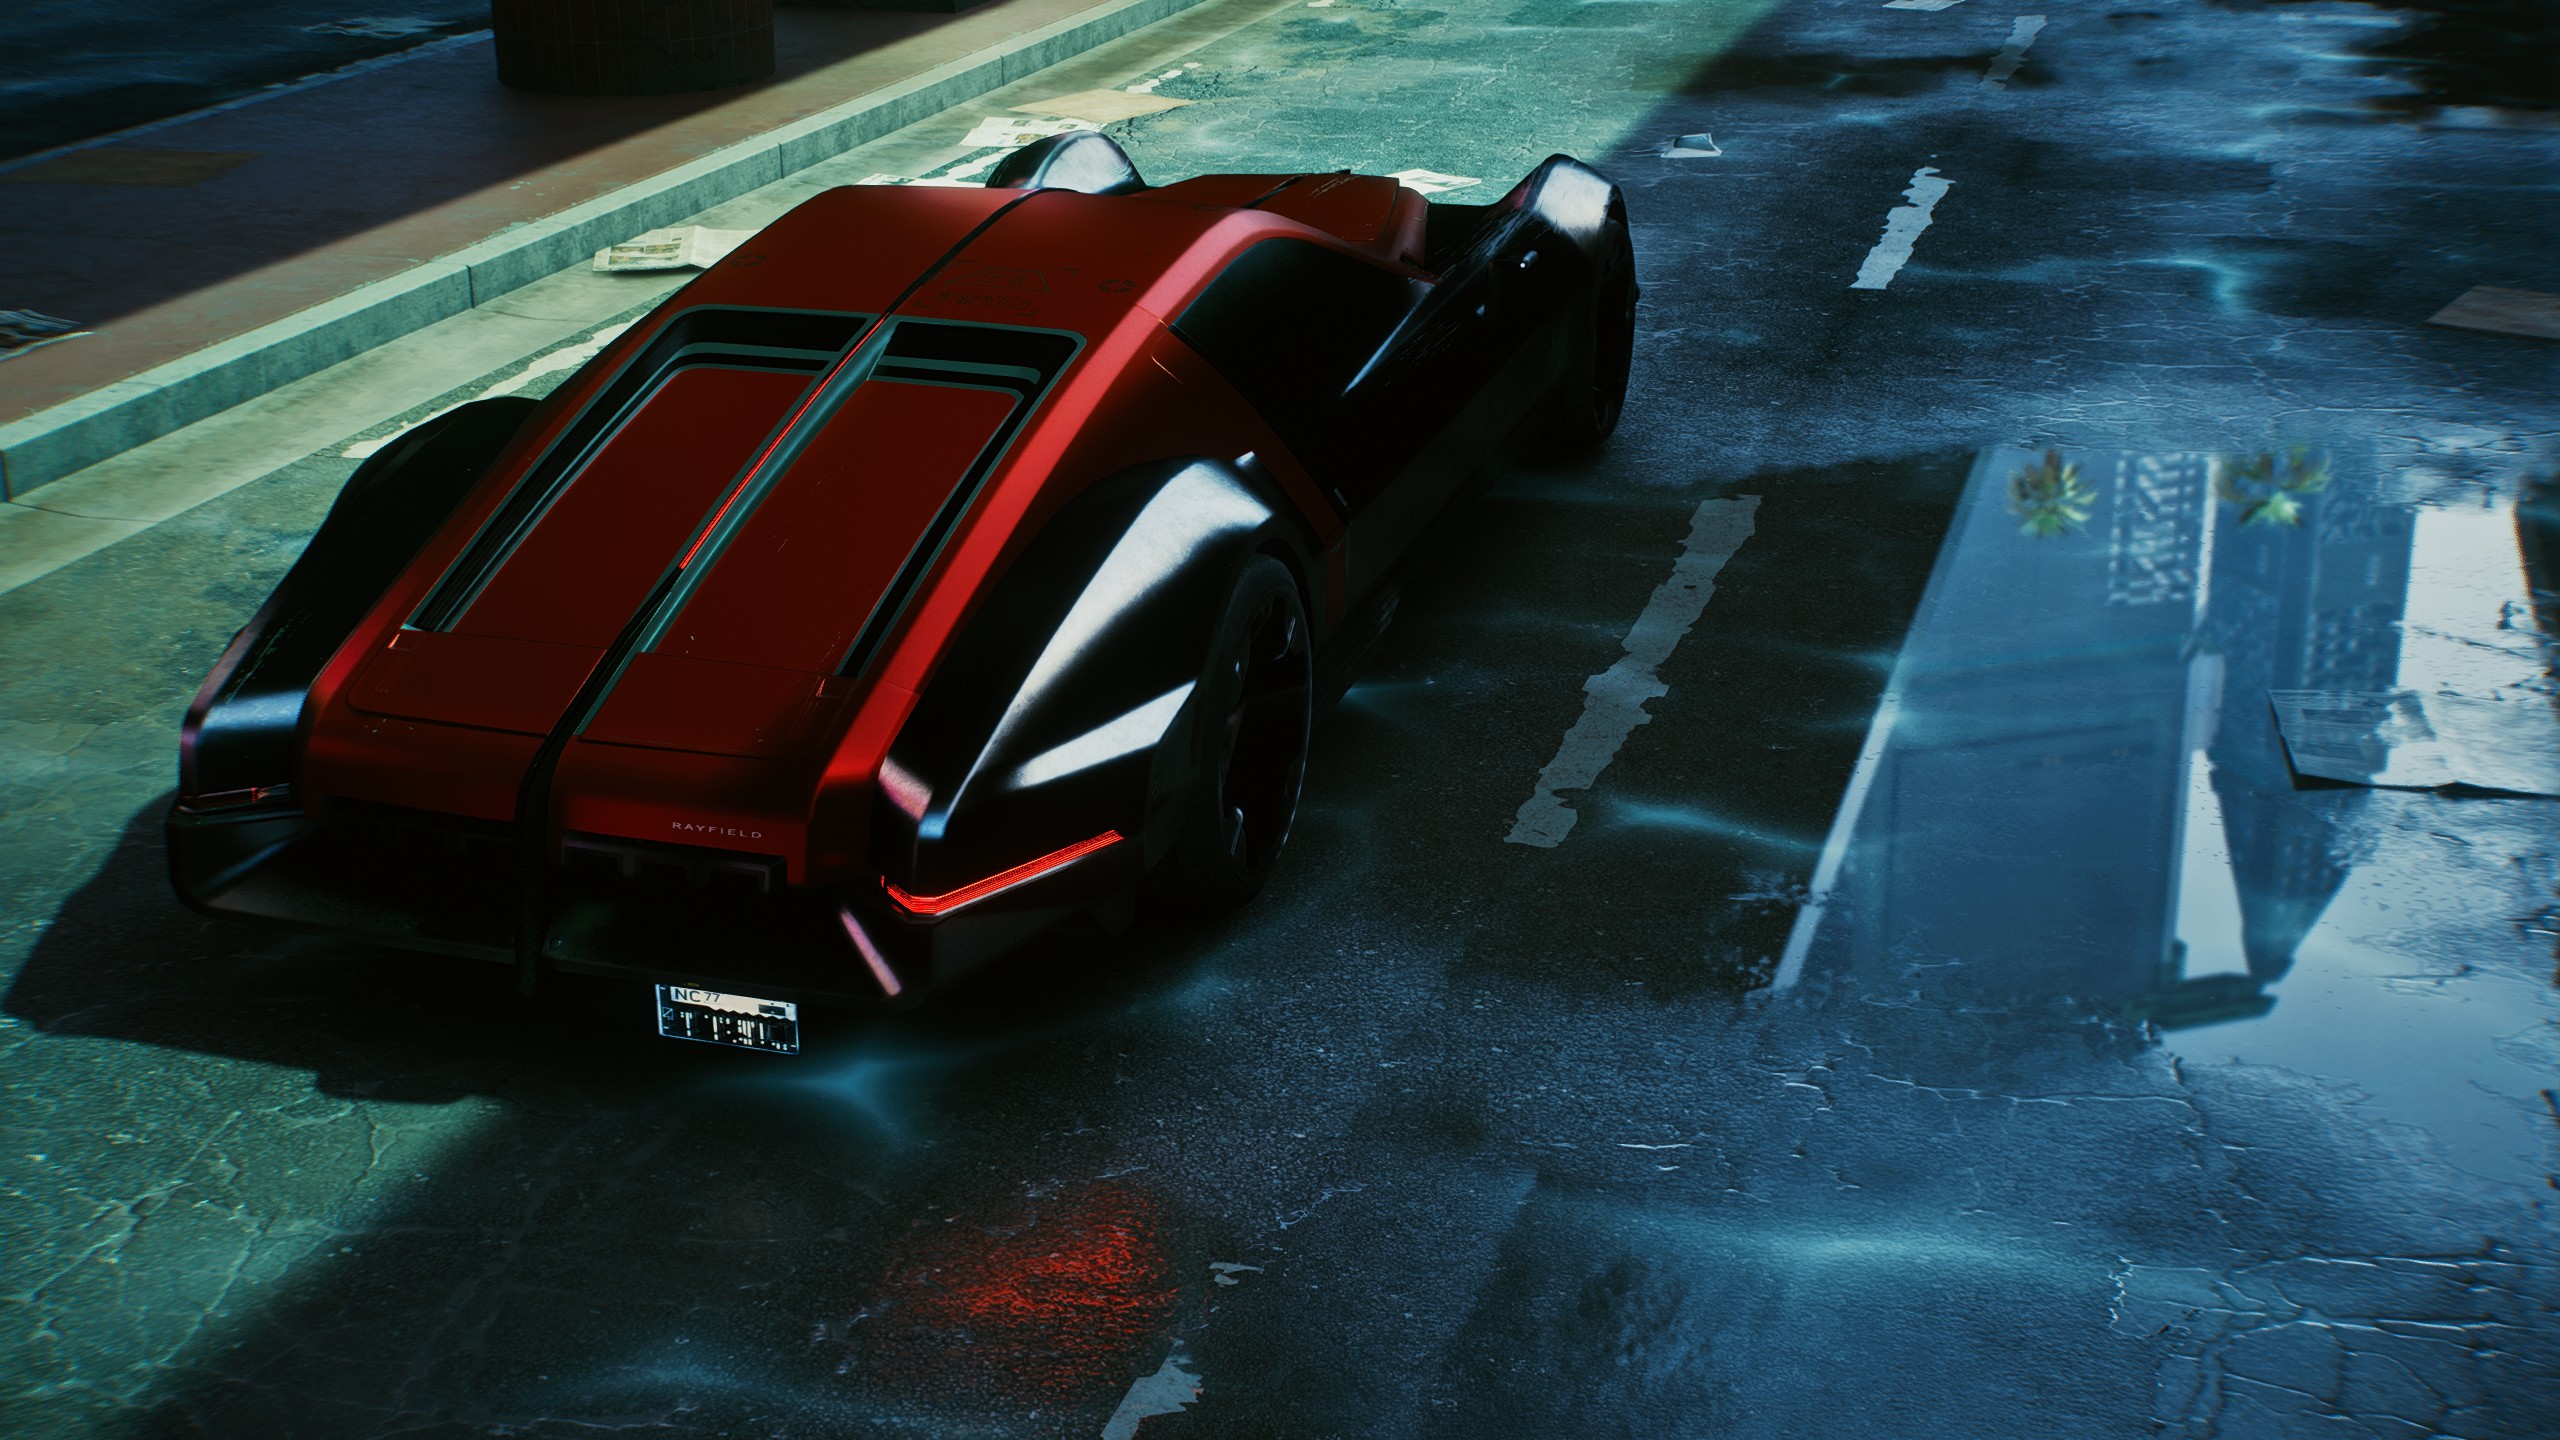 Cyberpunk 2077 Car Vehicle Reflection Asphalt Red Cars Screen Shot Futuristic Video Games PC Gaming 2560x1440